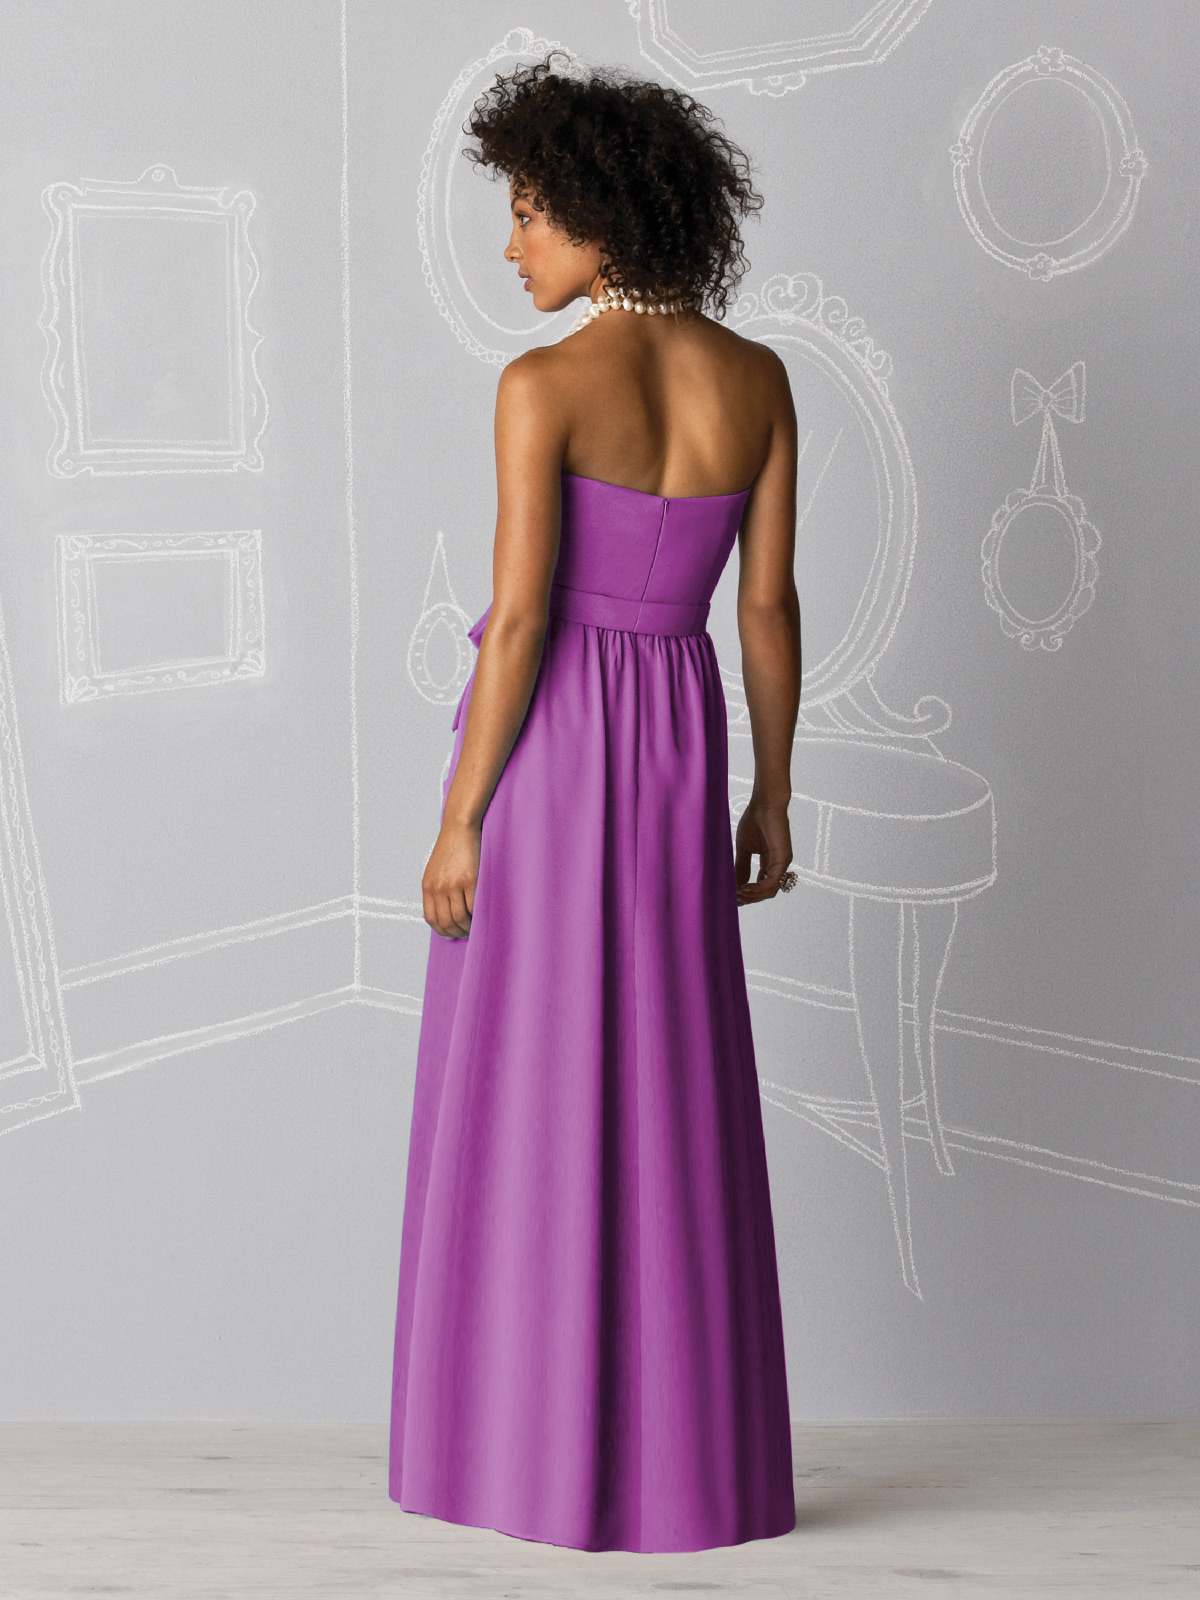 Violet Column Strapless Zipper Full Length Chiffon Prom Dresses With ...